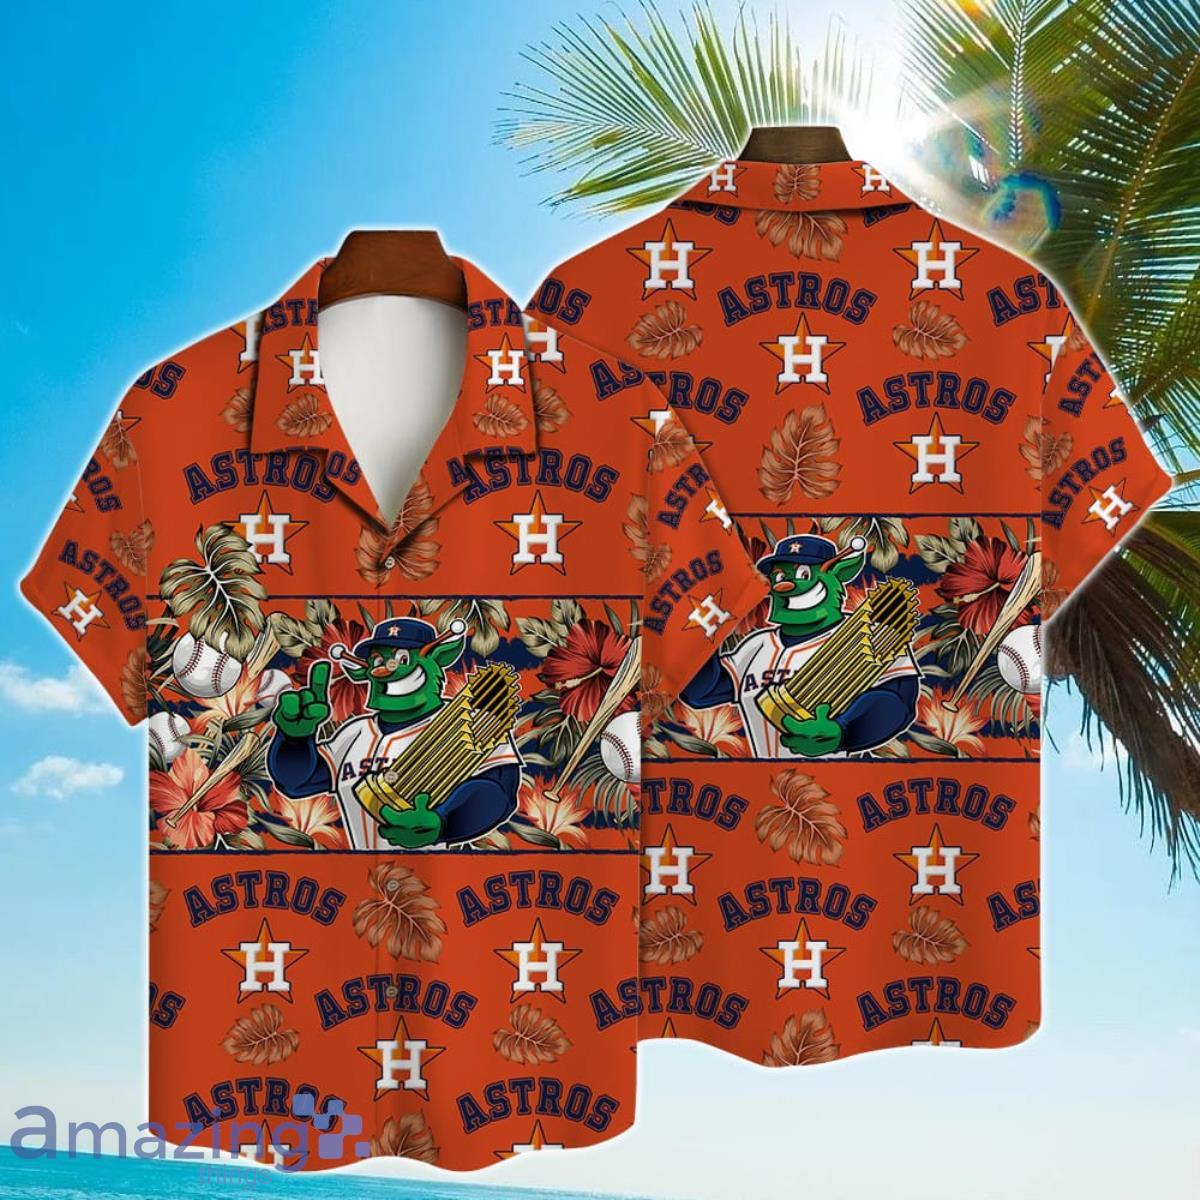 Houston Astros Vintage Sea Island Pattern Hawaiian Shirt And